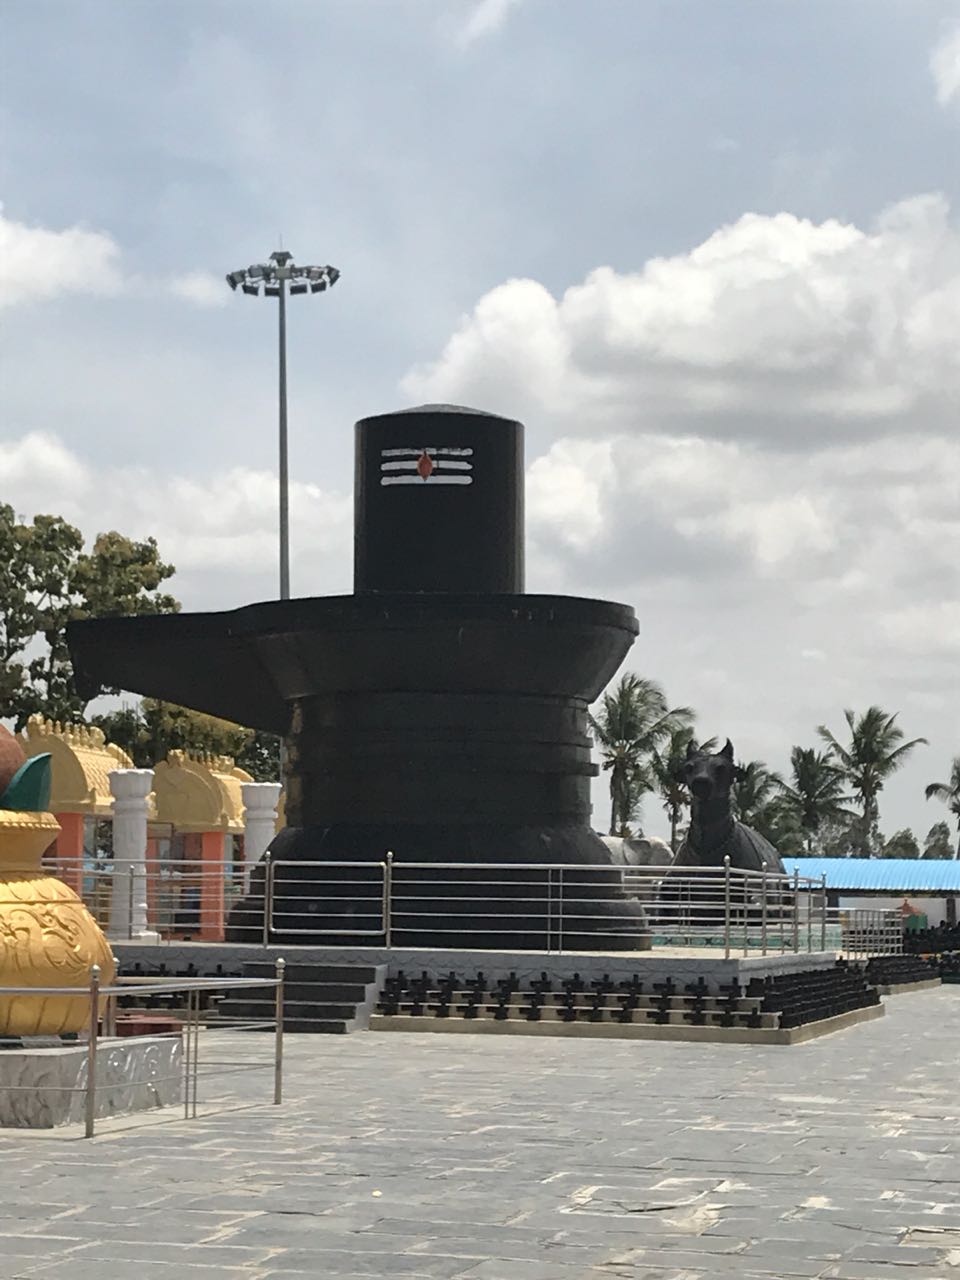 kotilingeswara temple